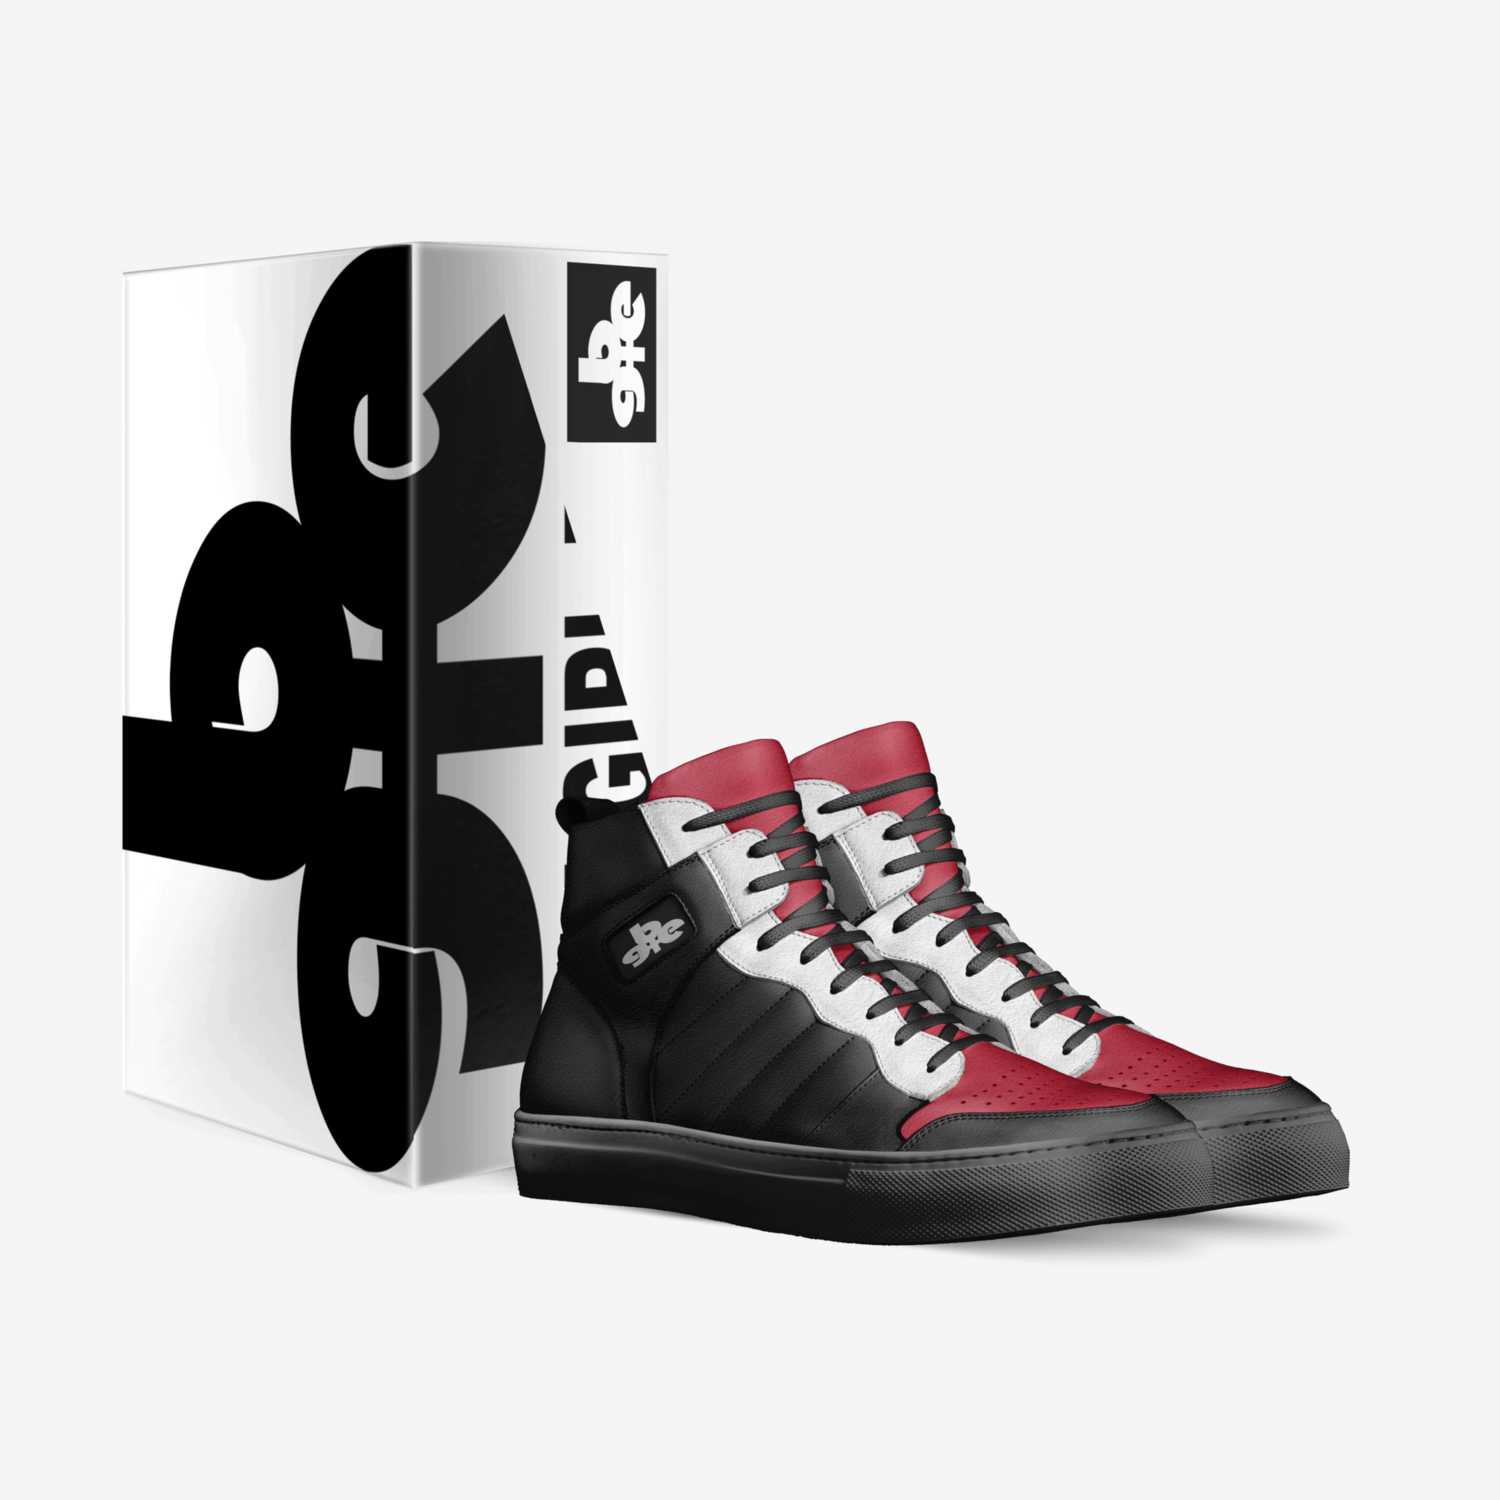 RACHEL LORIN SJ1 custom made in Italy shoes by Baby-girl Elite | Box view